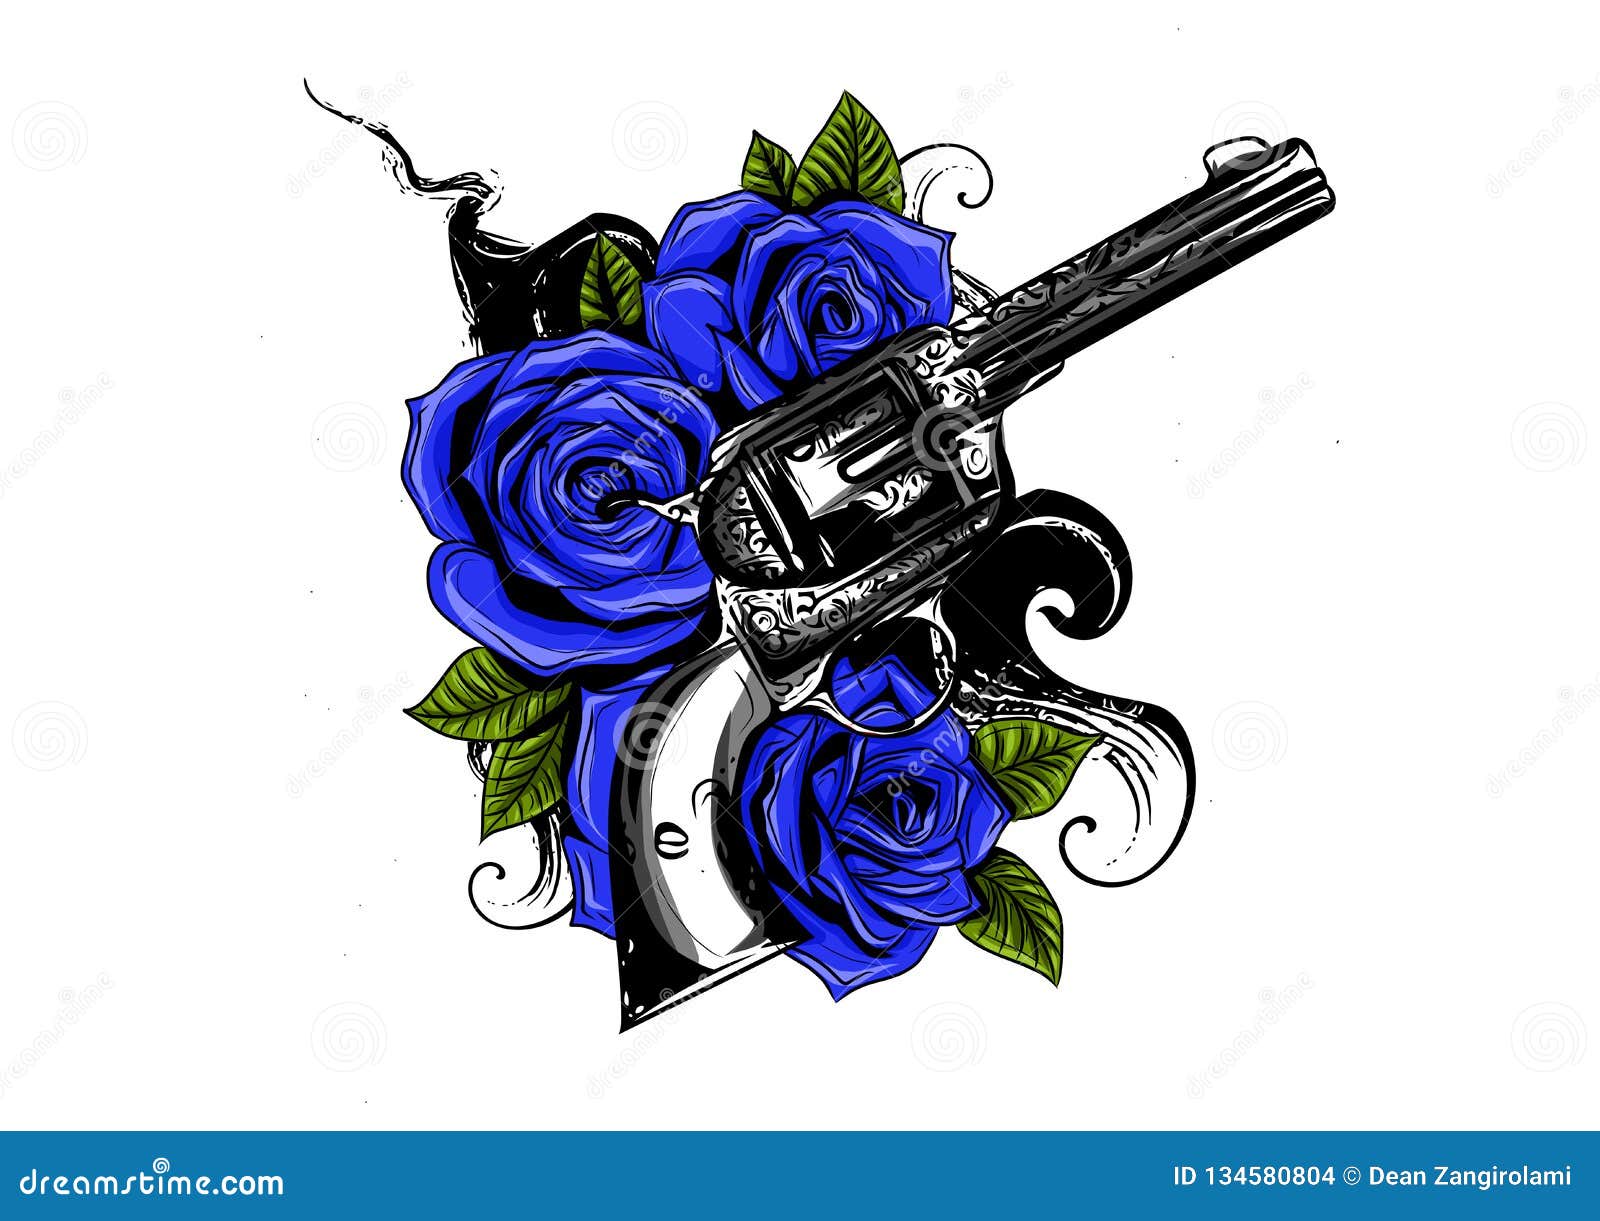 Gun Tattoo Cliparts Stock Vector and Royalty Free Gun Tattoo Illustrations